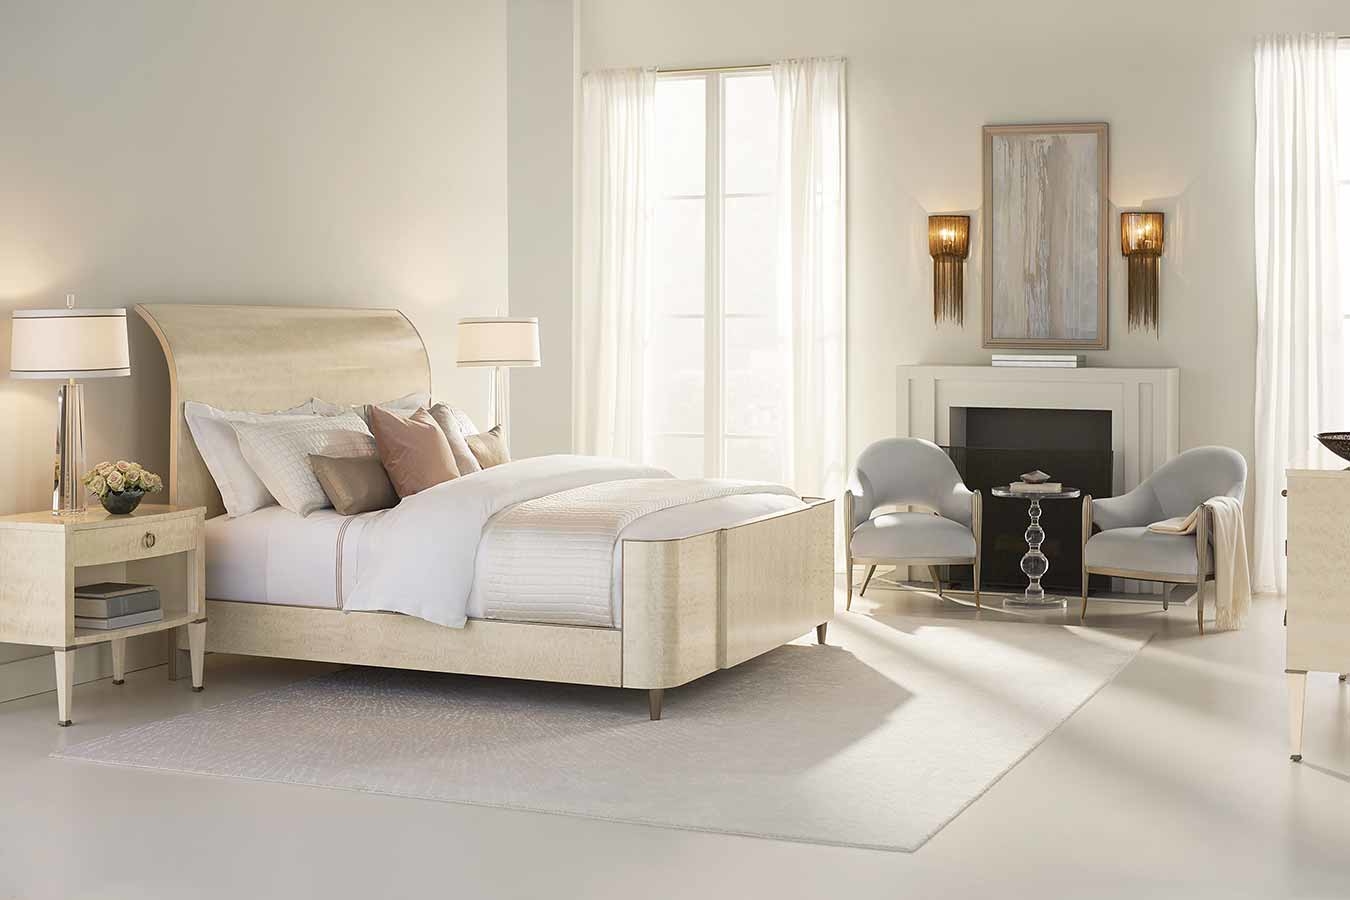 bedroom furniture suppliers johannesburg